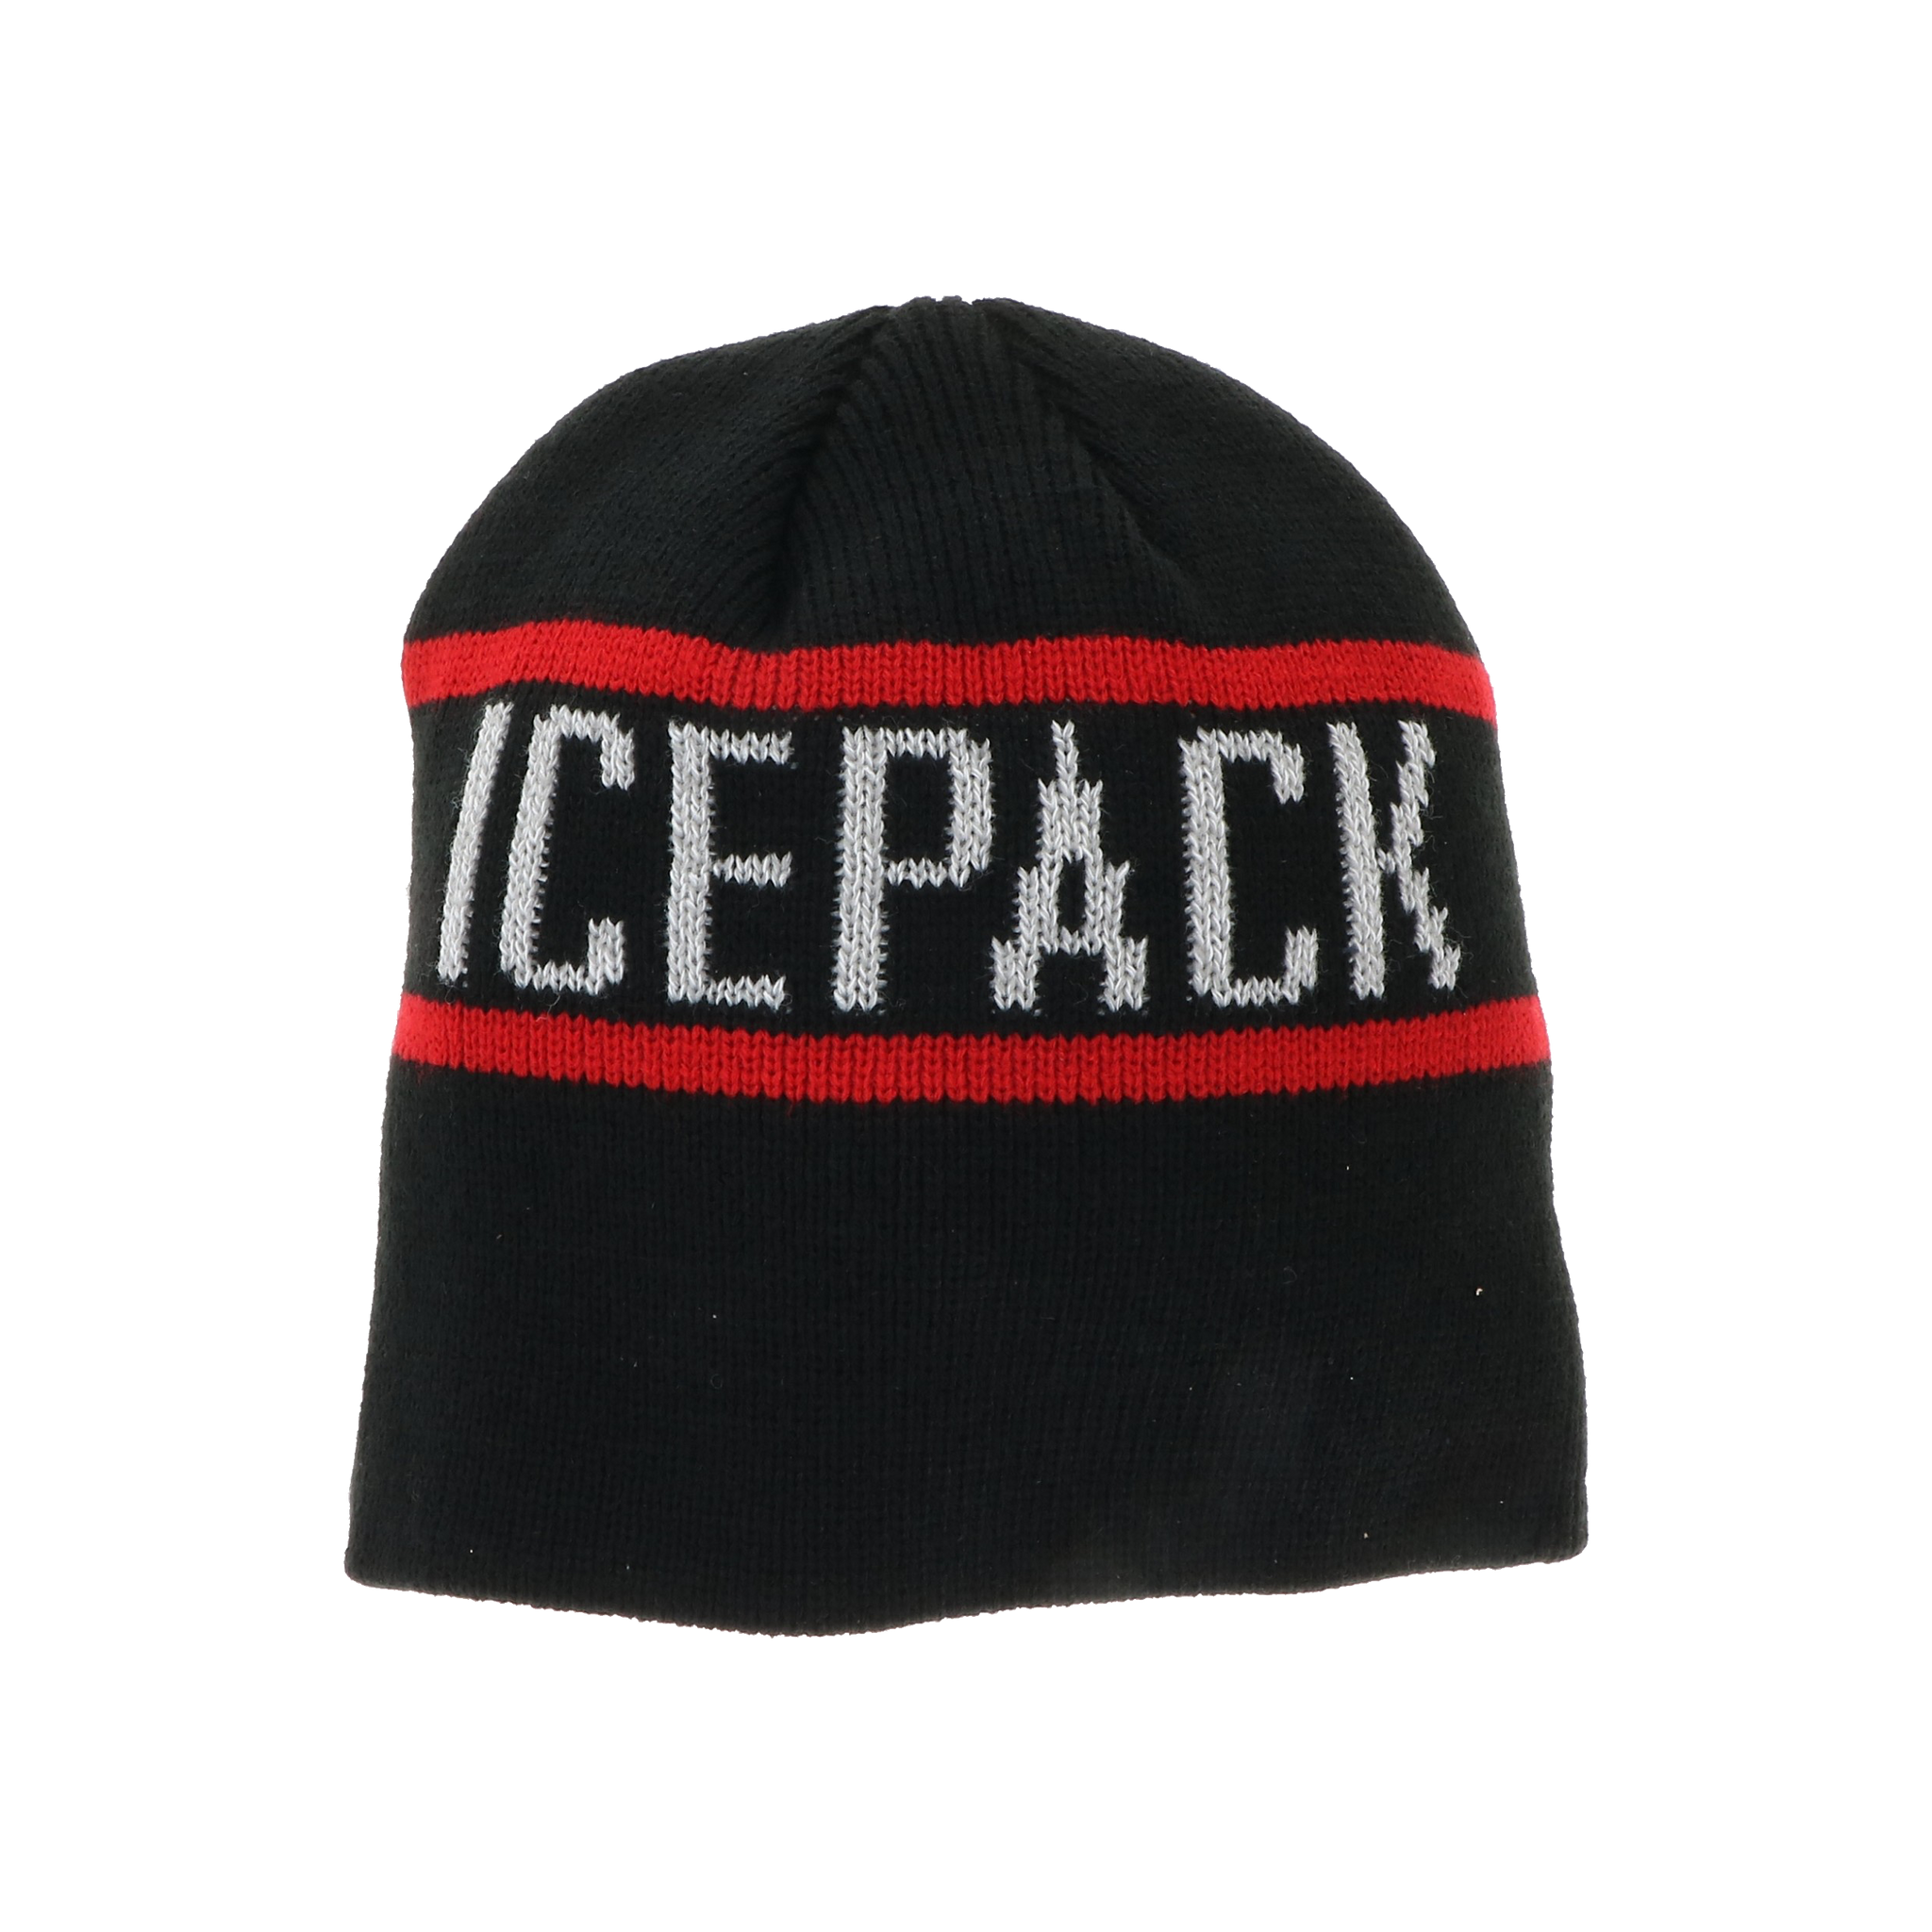 Legacy Black and Red Icepack Beanie